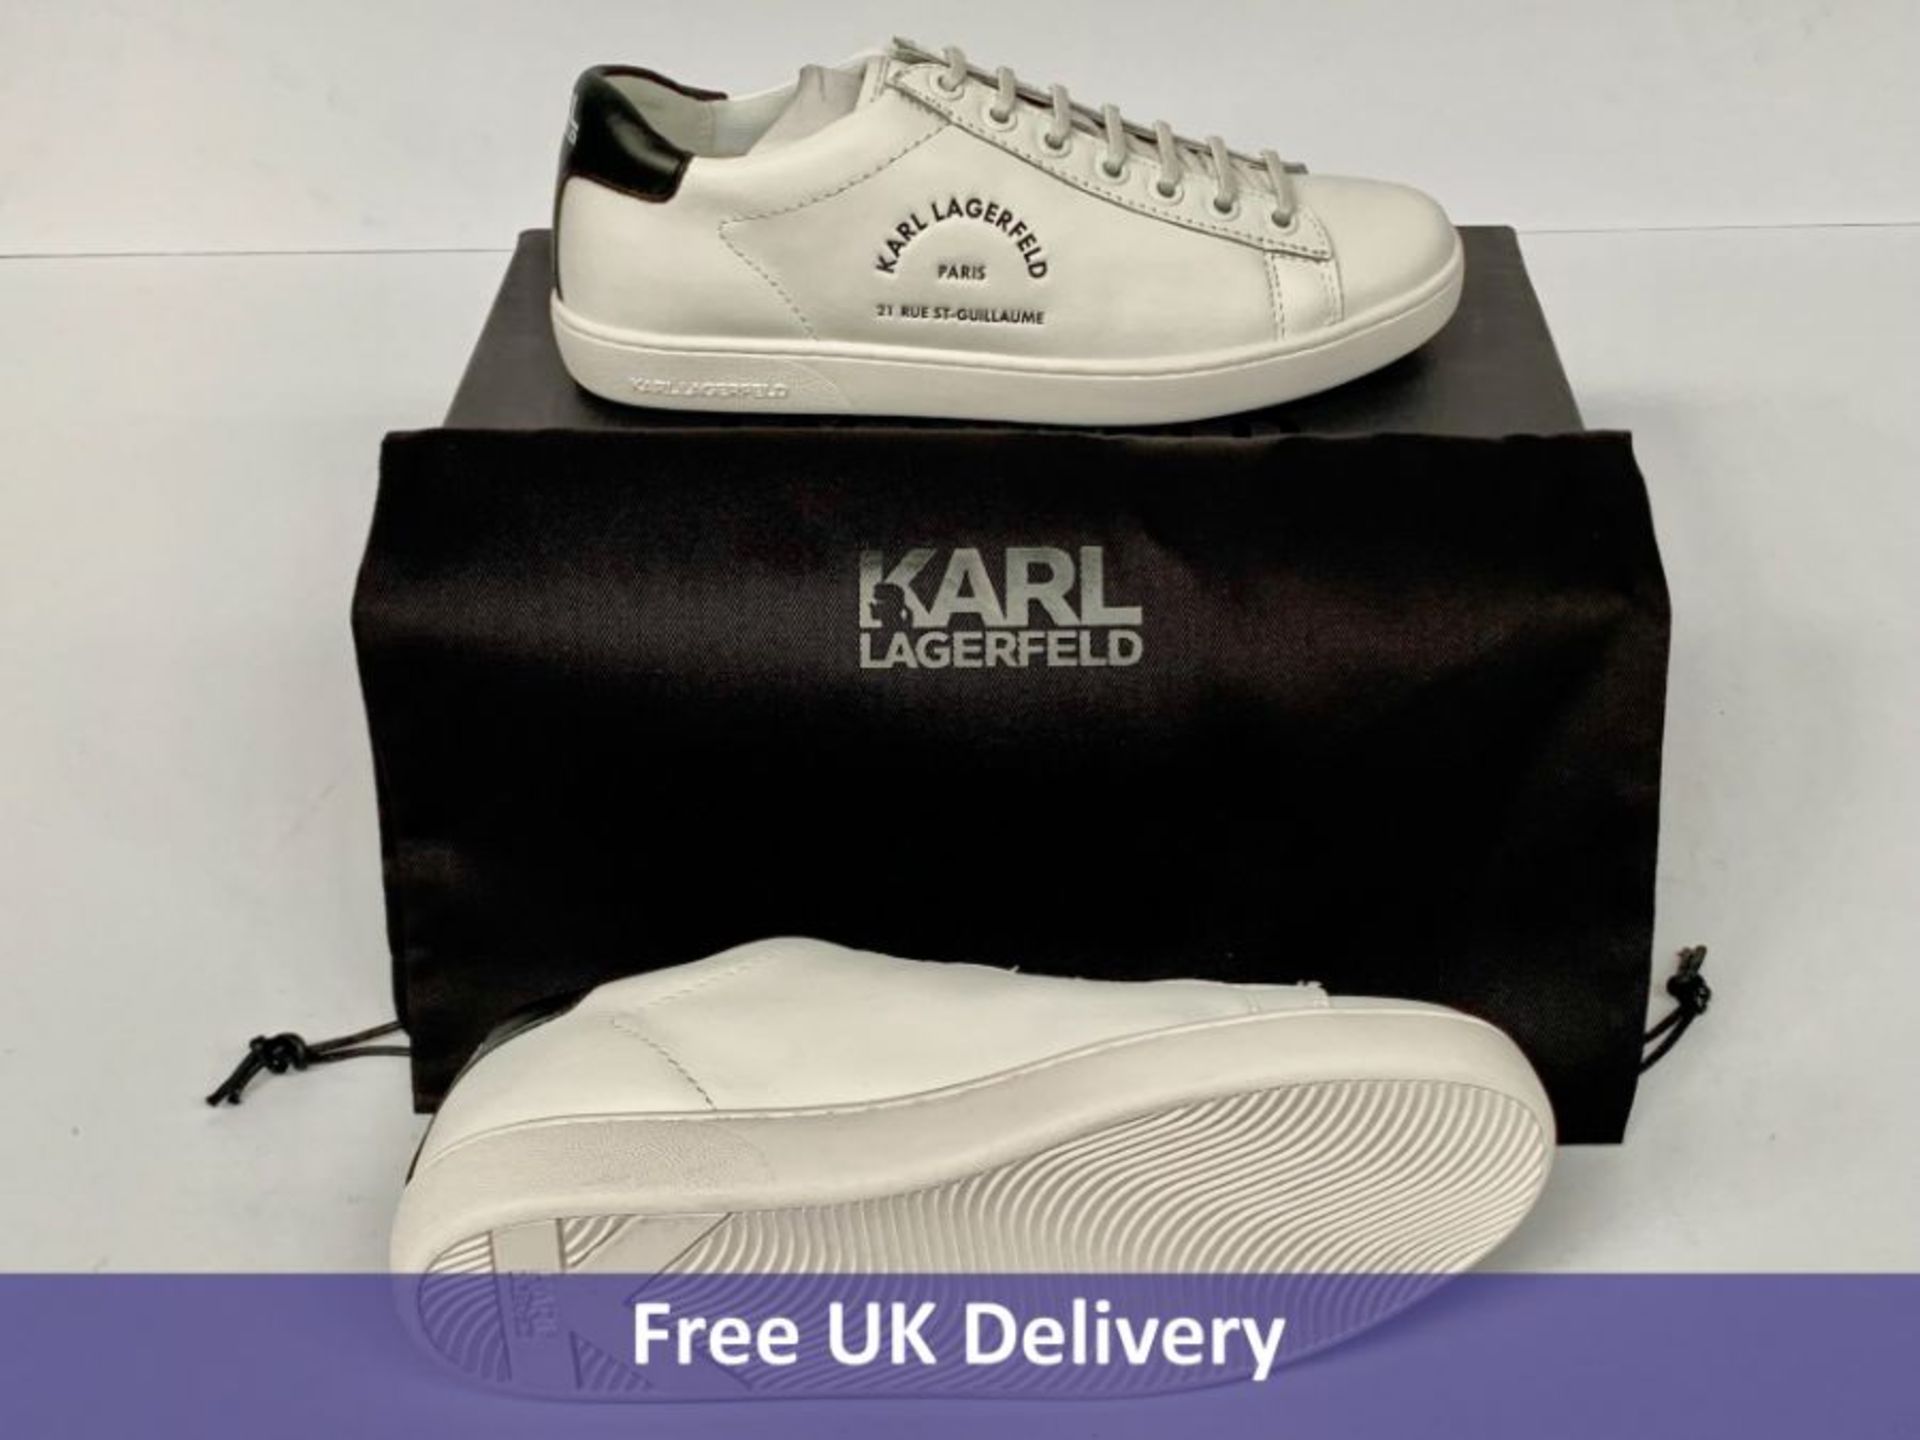 Karl Lagerfeld Women's Trainers, White, UK 4. Box damaged